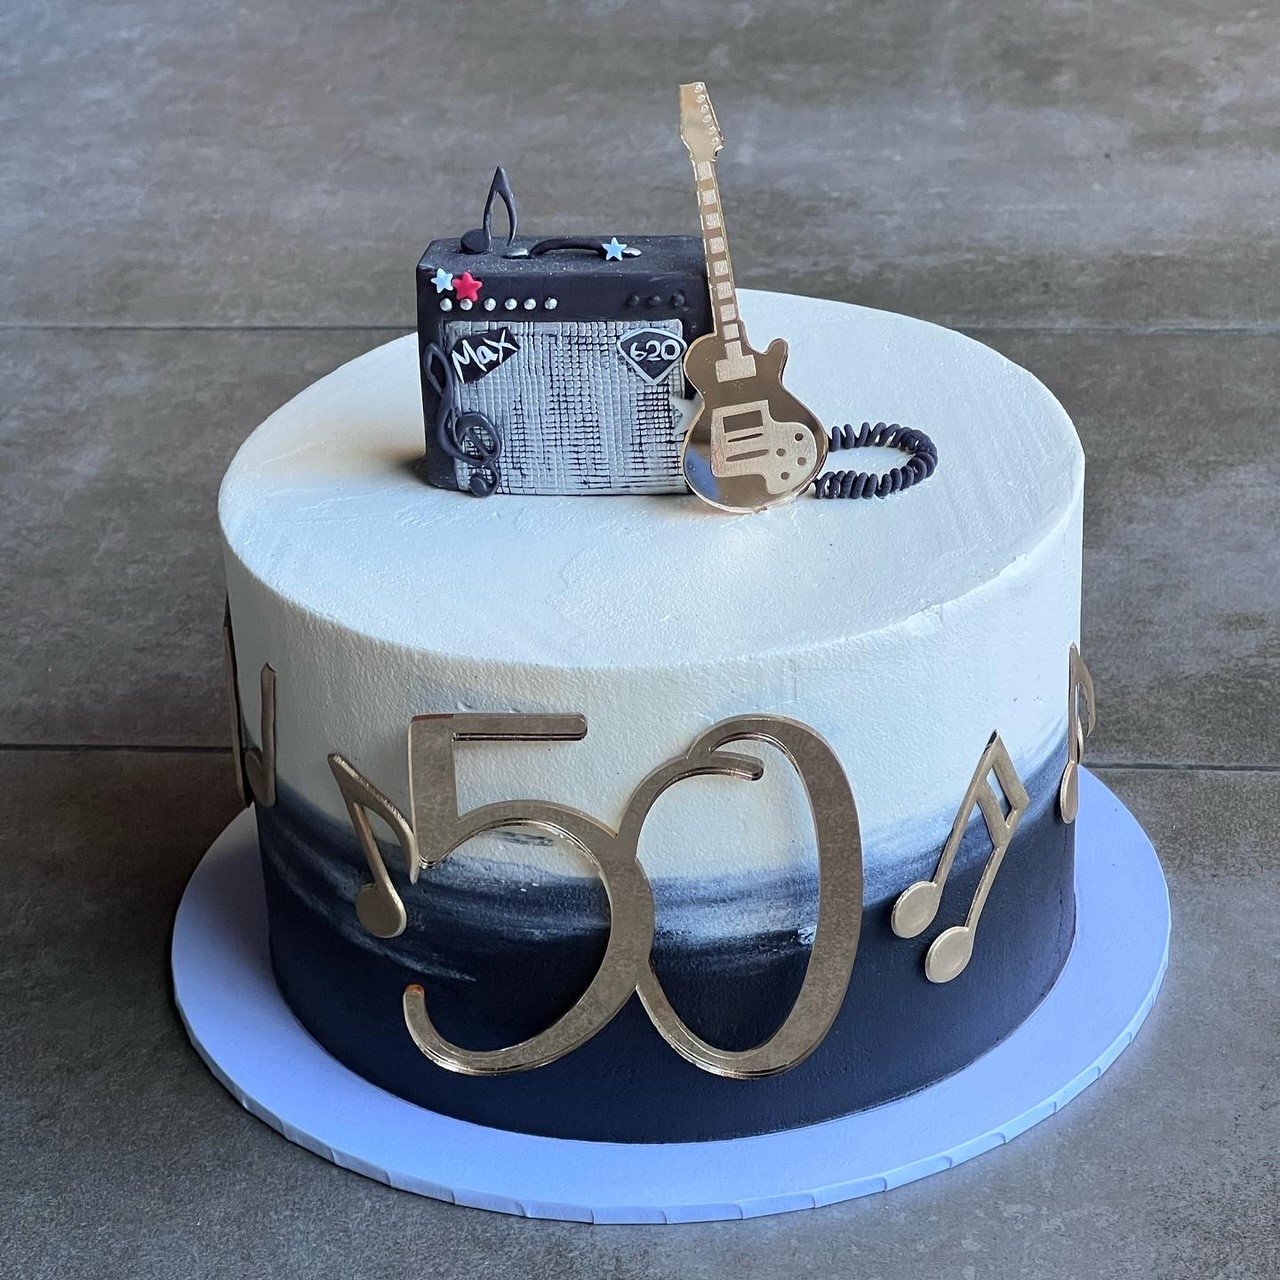 vanillapodspecialtycakes-50thbirthdaycake-noveltycakes-brisbanebakery-vanillapod-brisbanecakes-buttercreamcake-birthdaycake-musician-brisbanedesigner-australiandesigner (1).jpg